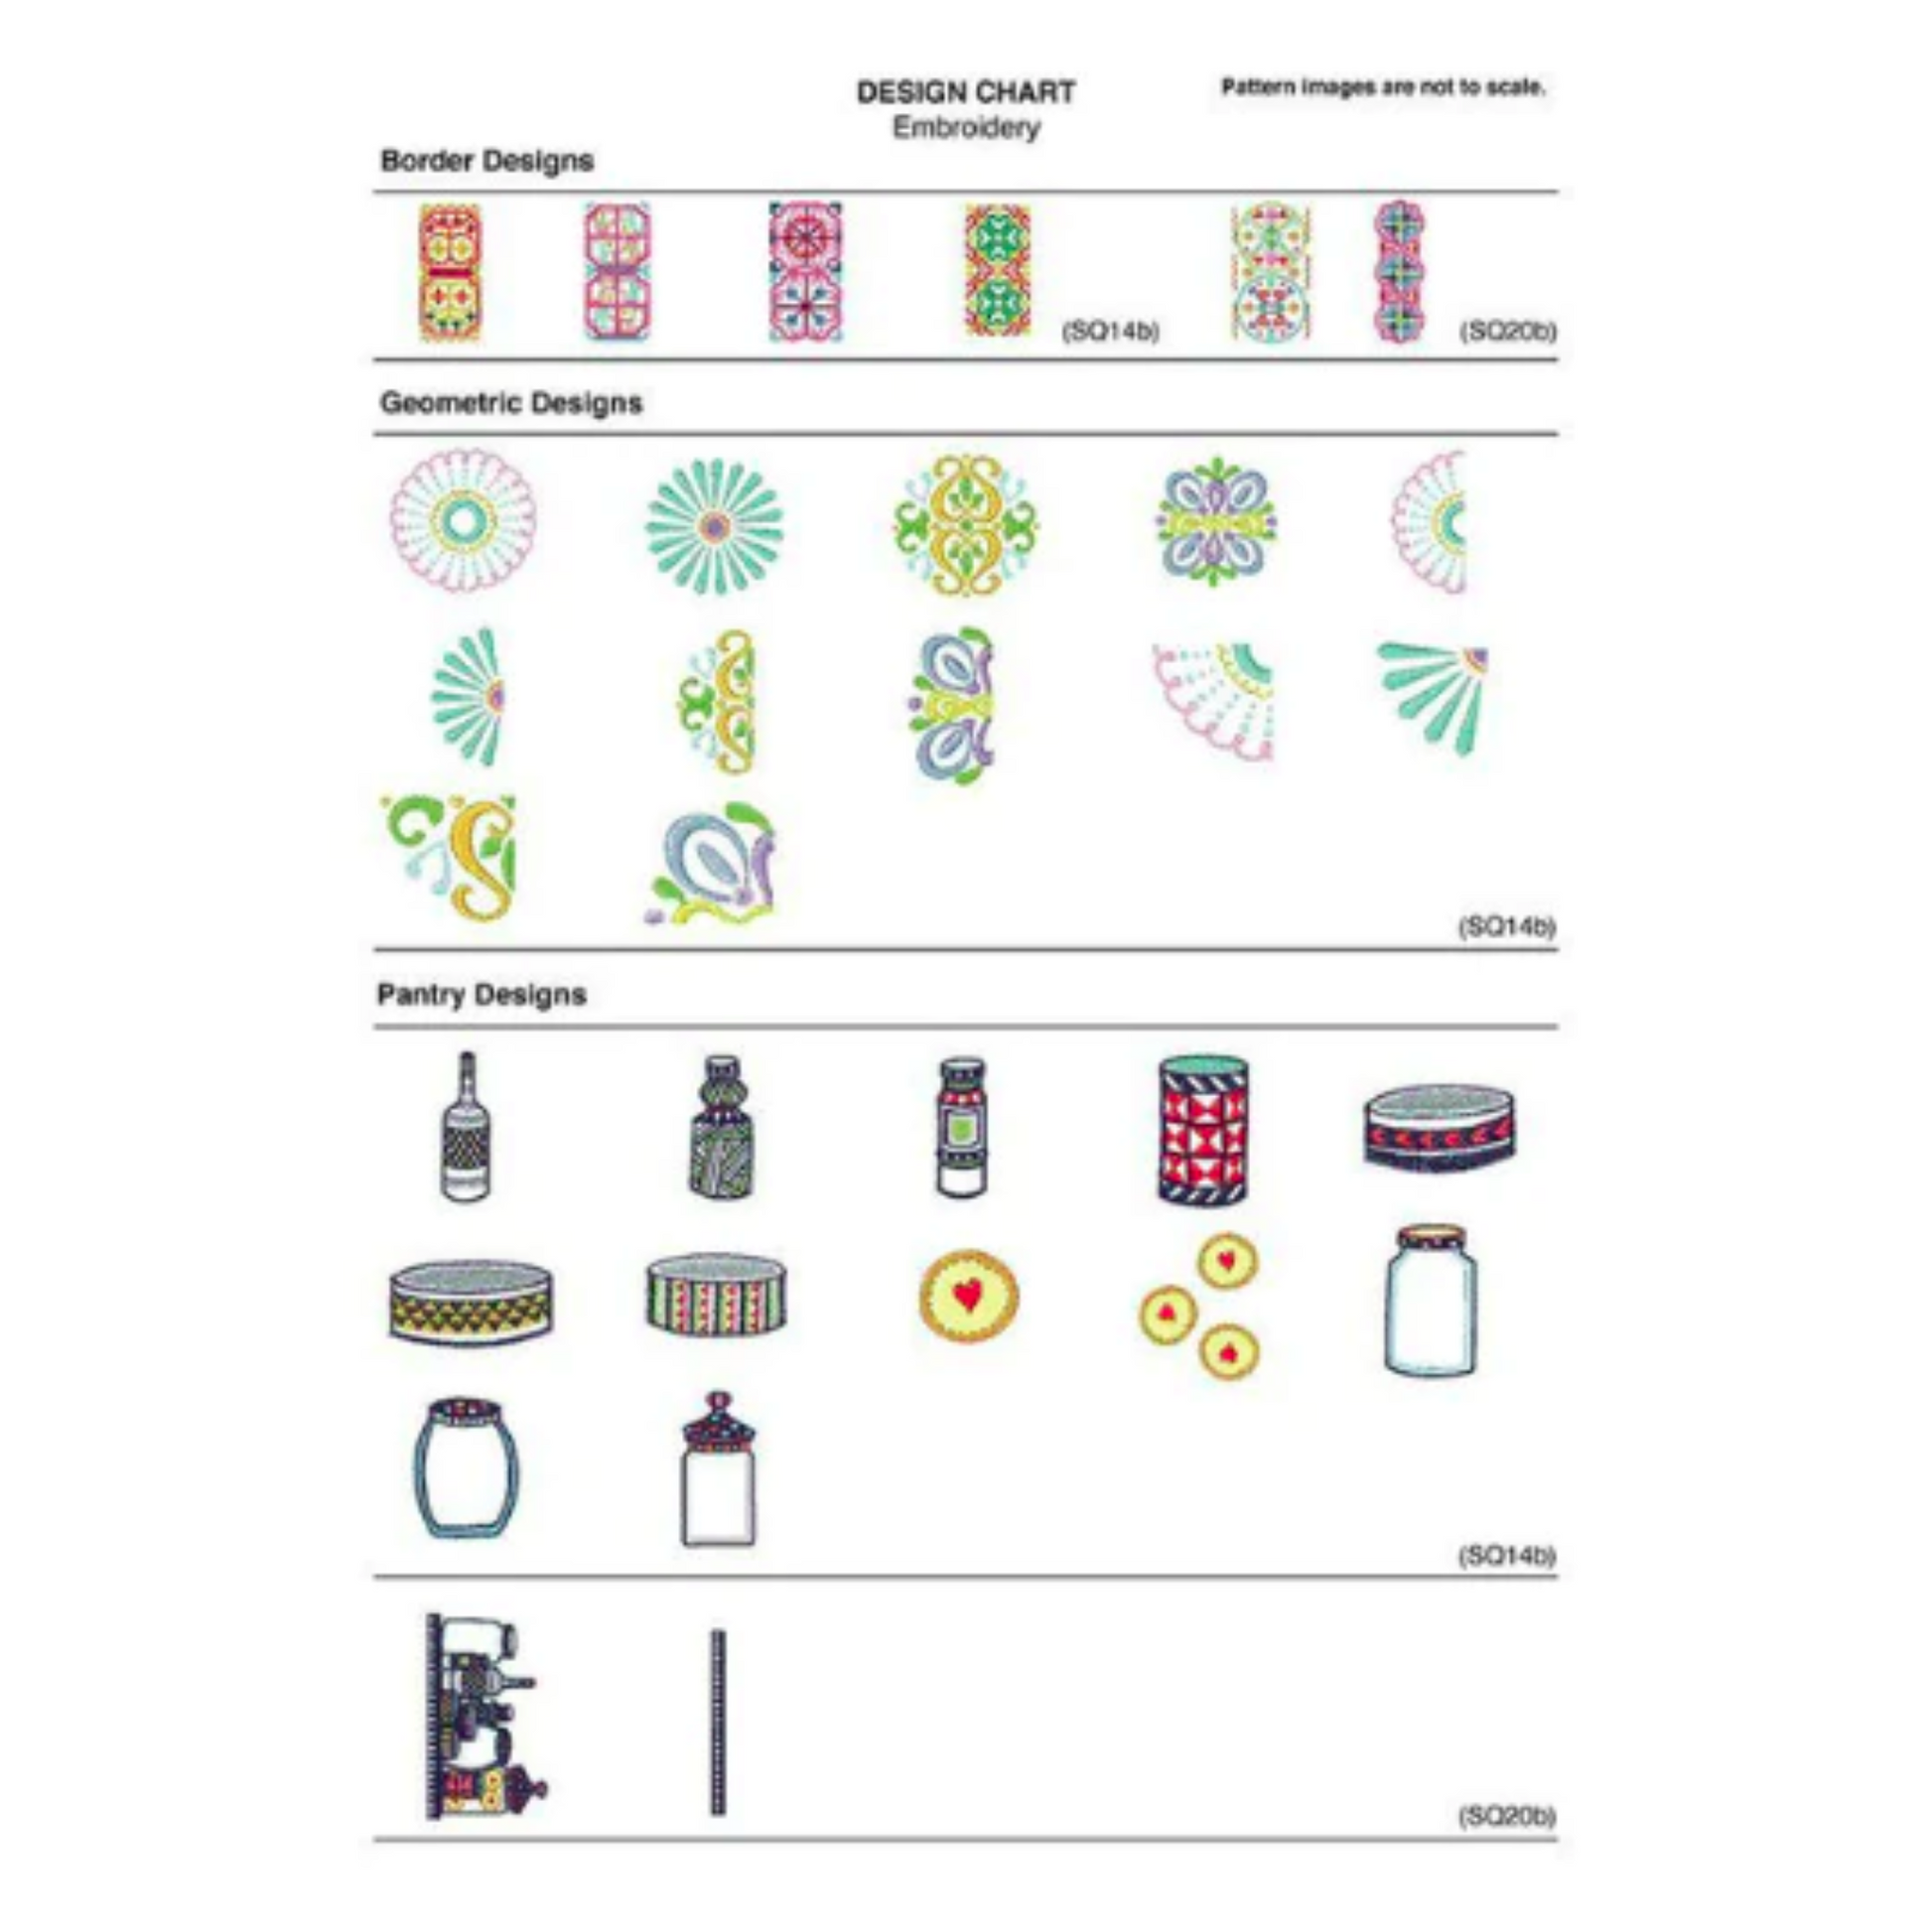 Janome MC450E embroidery machine - Sewing machine - White - Design chart